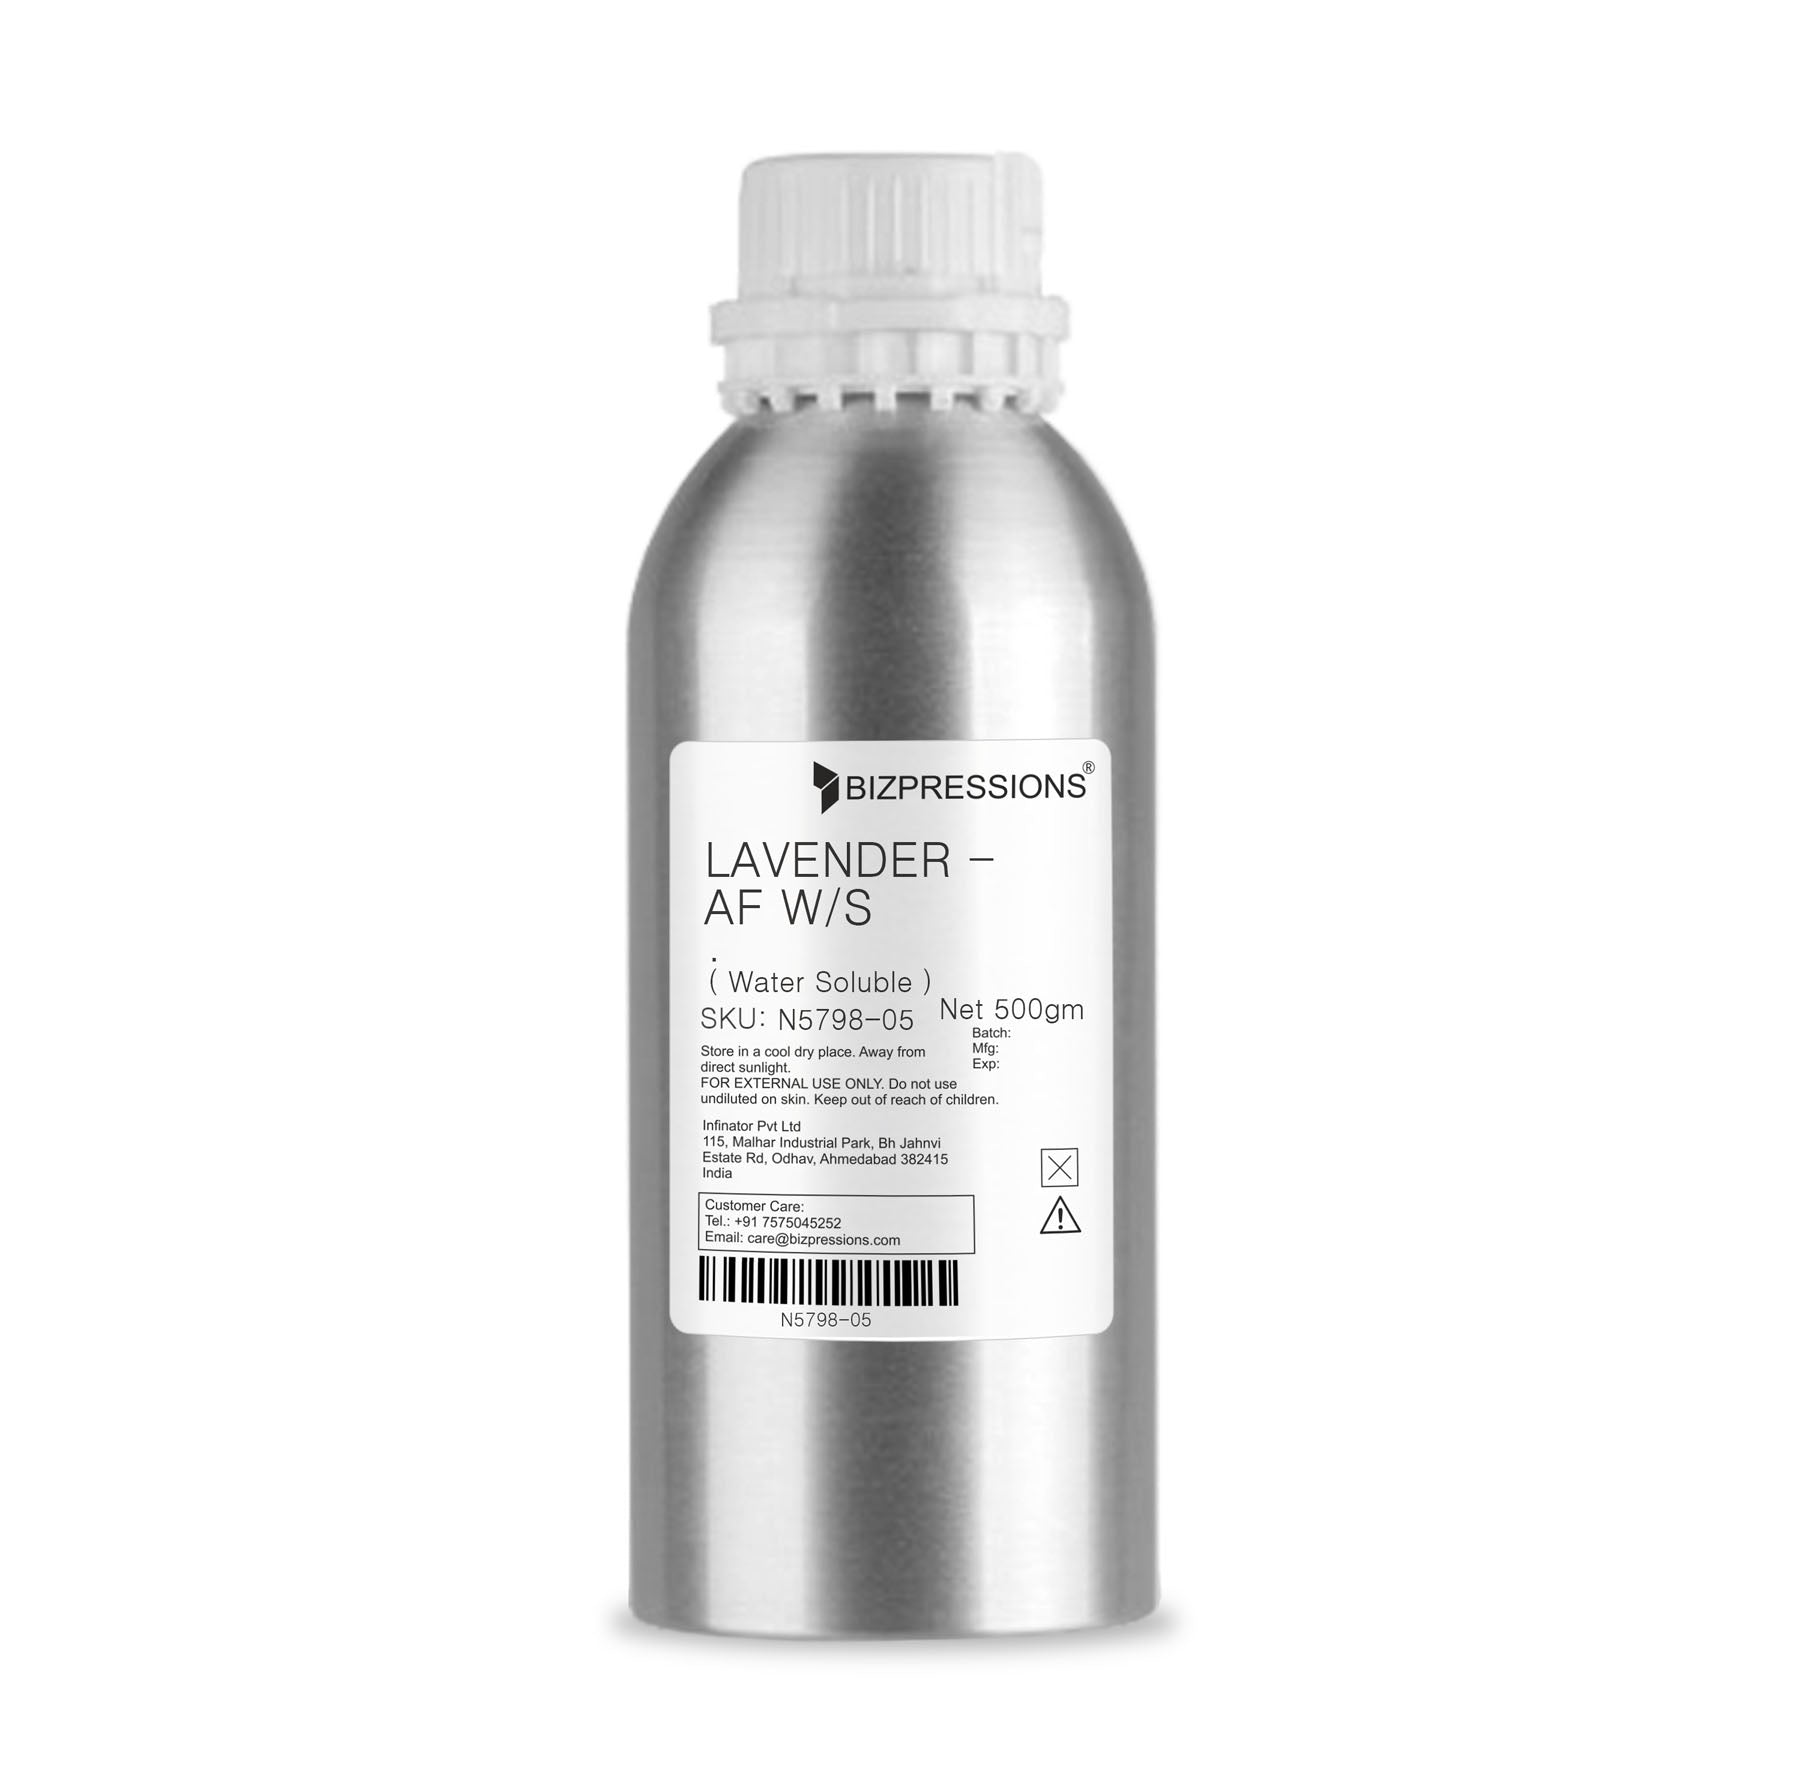 LAVENDER - AF W/S - Fragrance ( Water Soluble ) - 500 gm